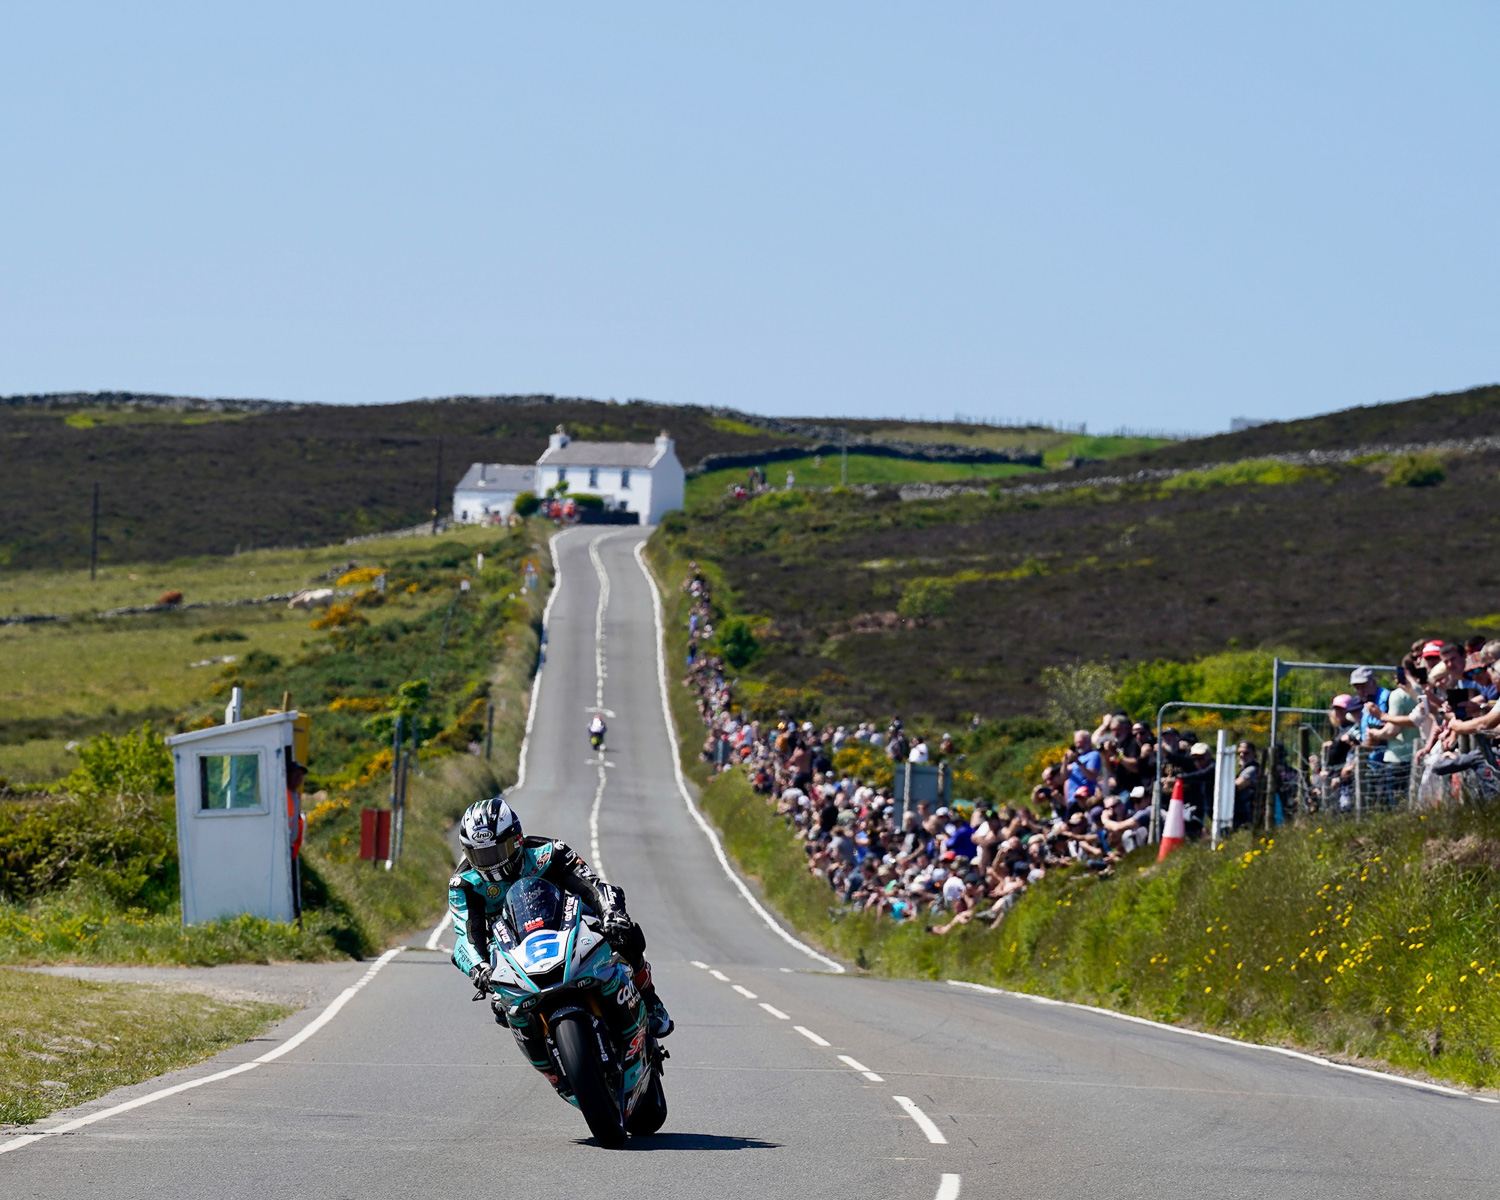 TT Race Isle of Man © Tim Keaton (Visit Isle of Man)